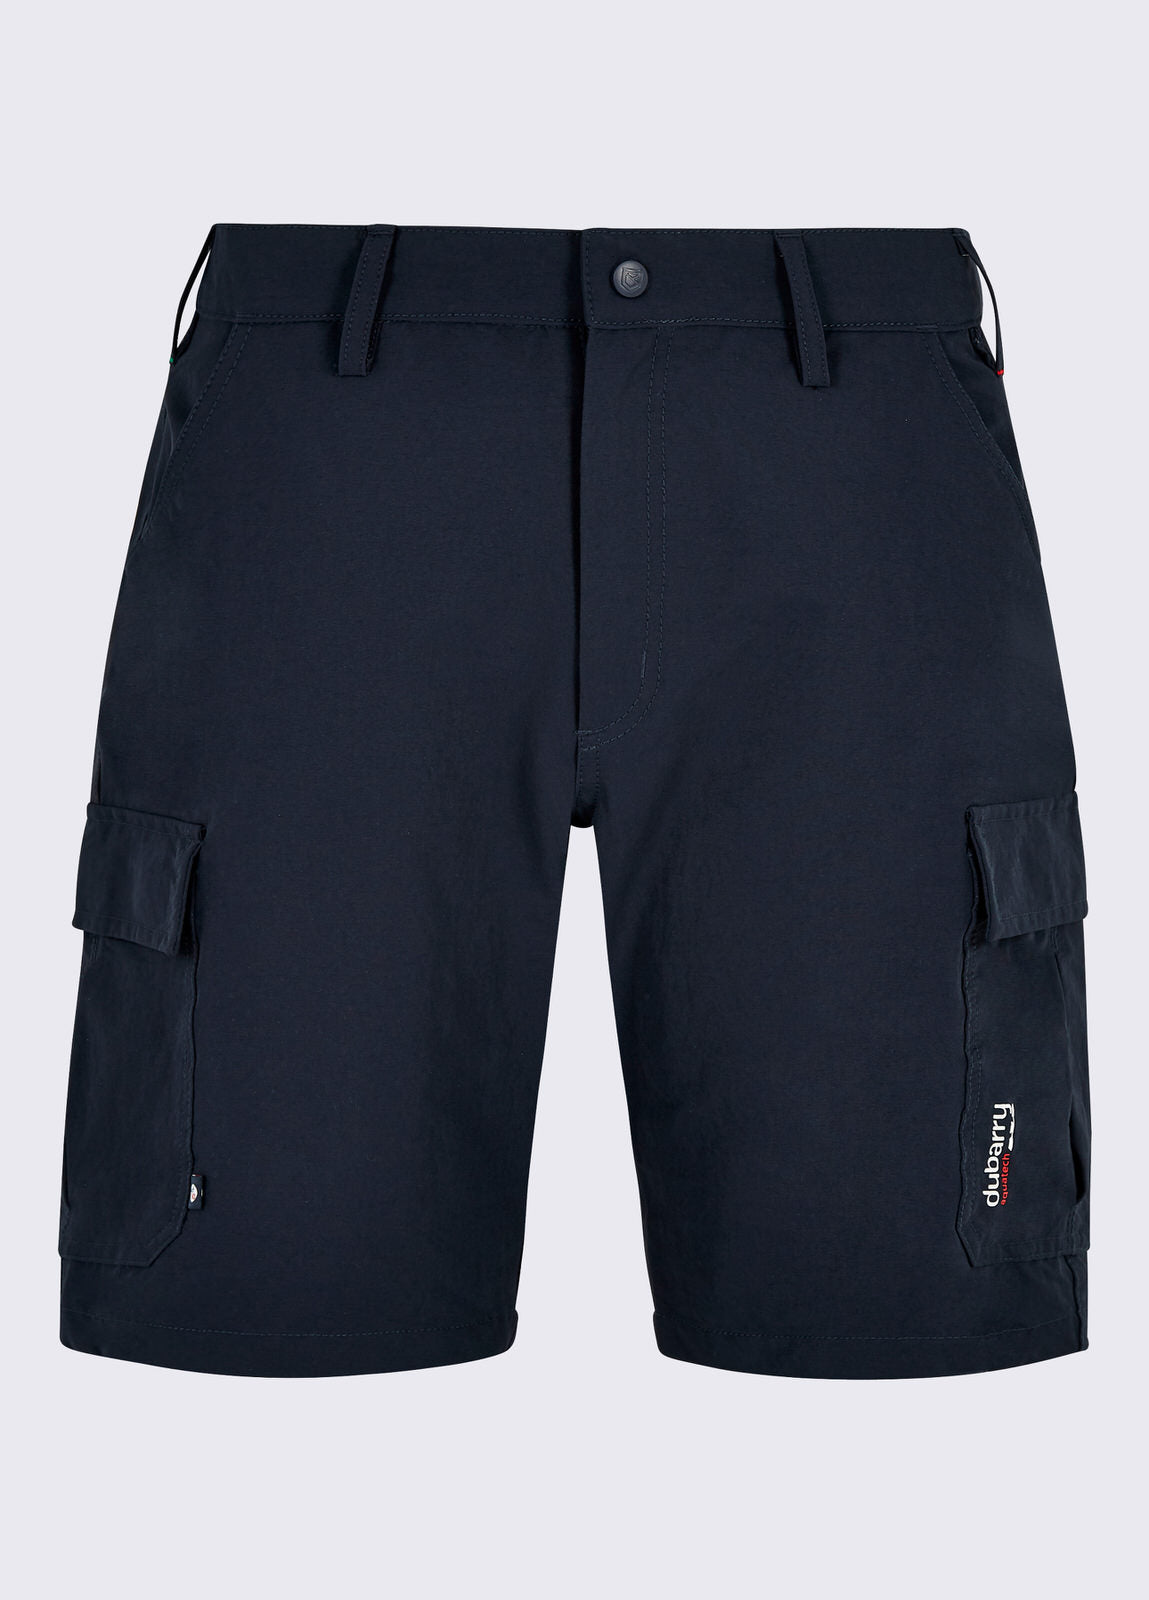 Imperia Mens Technical Shorts - Navy